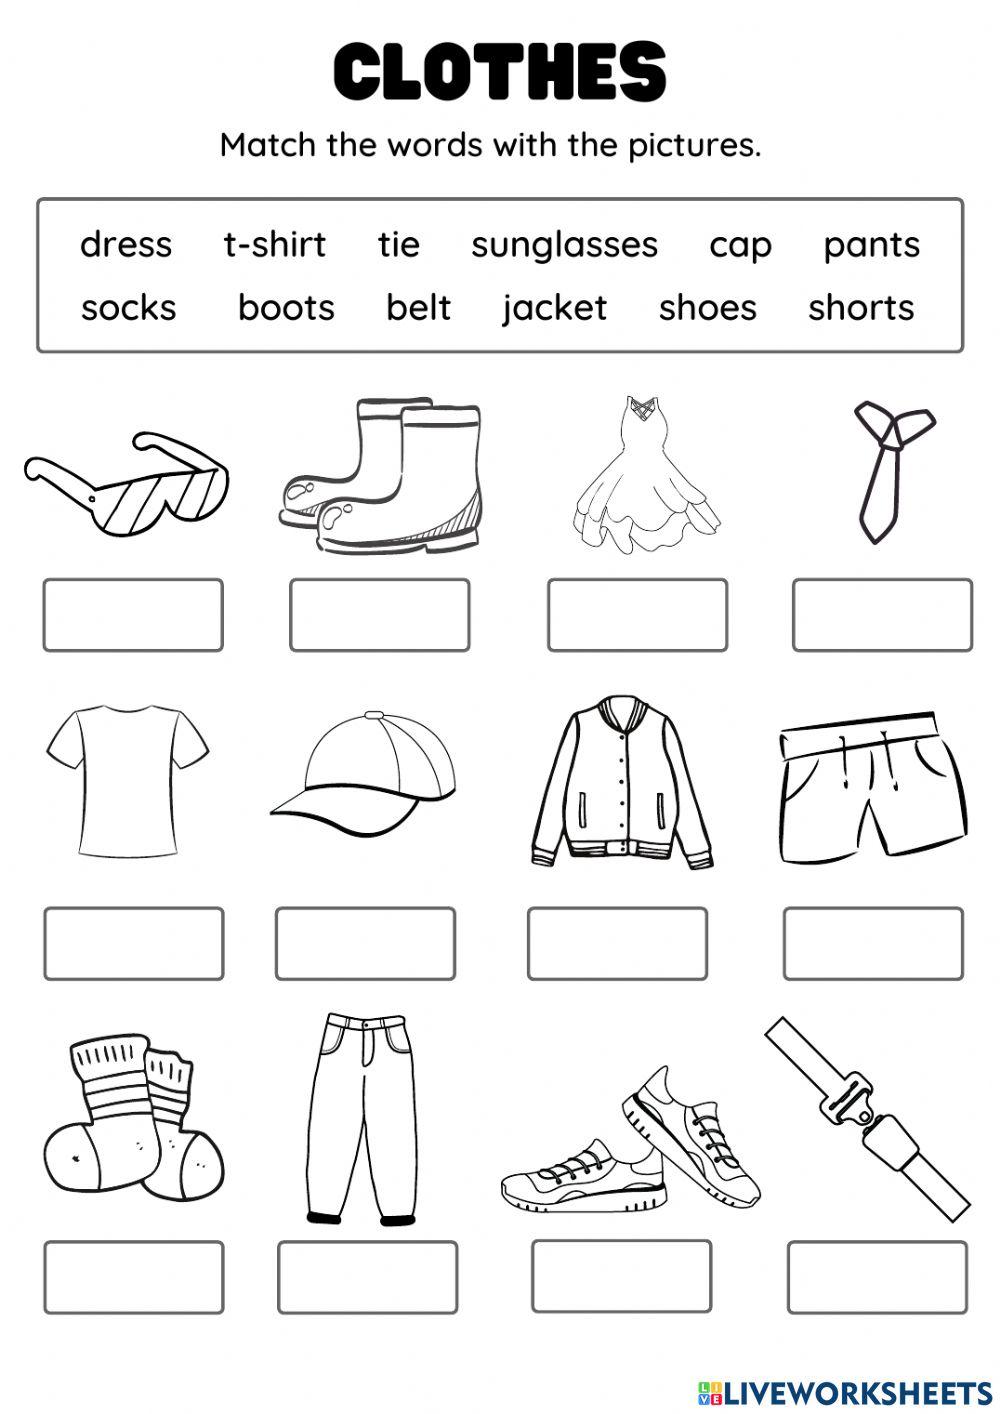 Clothes vocabulary online pdf worksheet